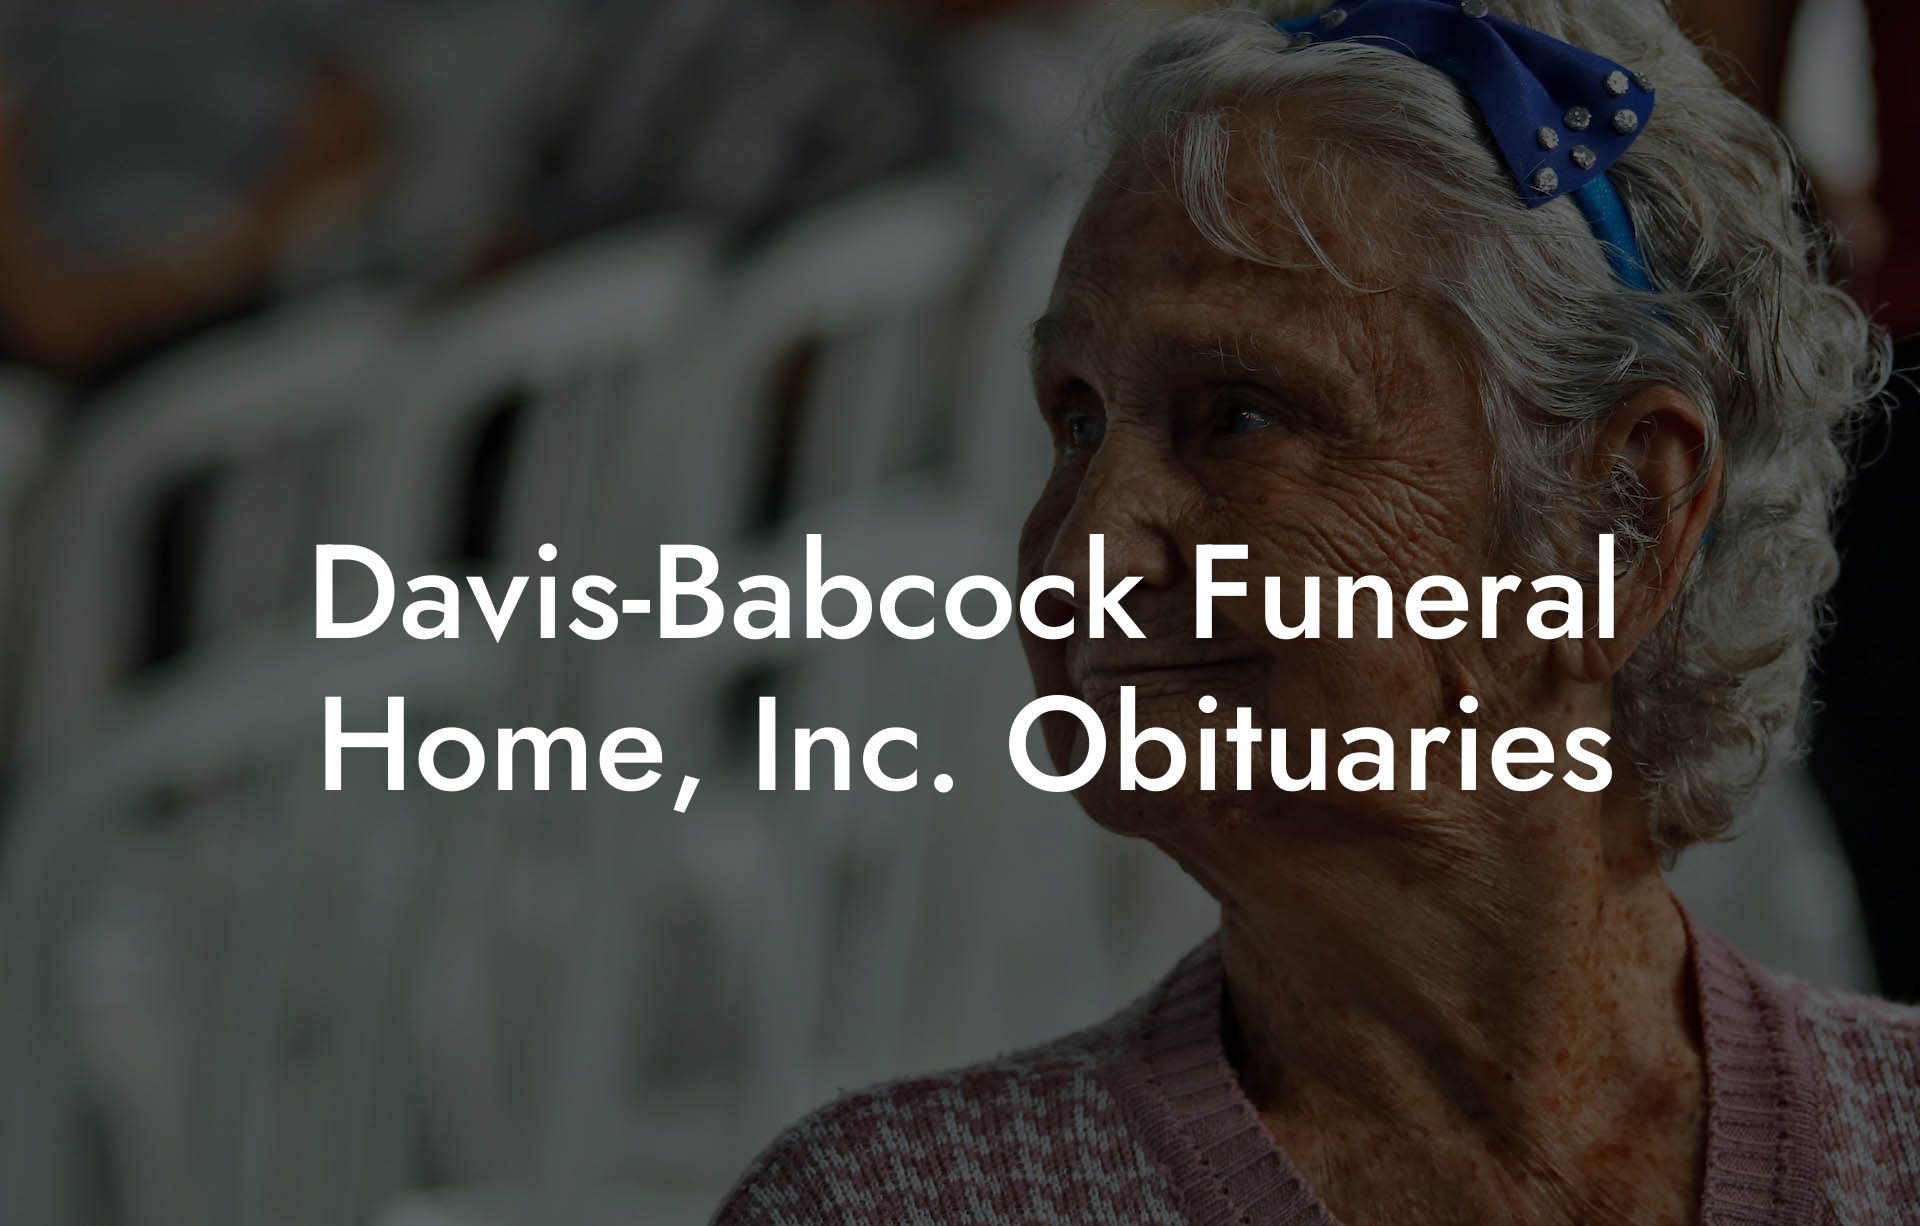 Davis-Babcock Funeral Home, Inc. Obituaries